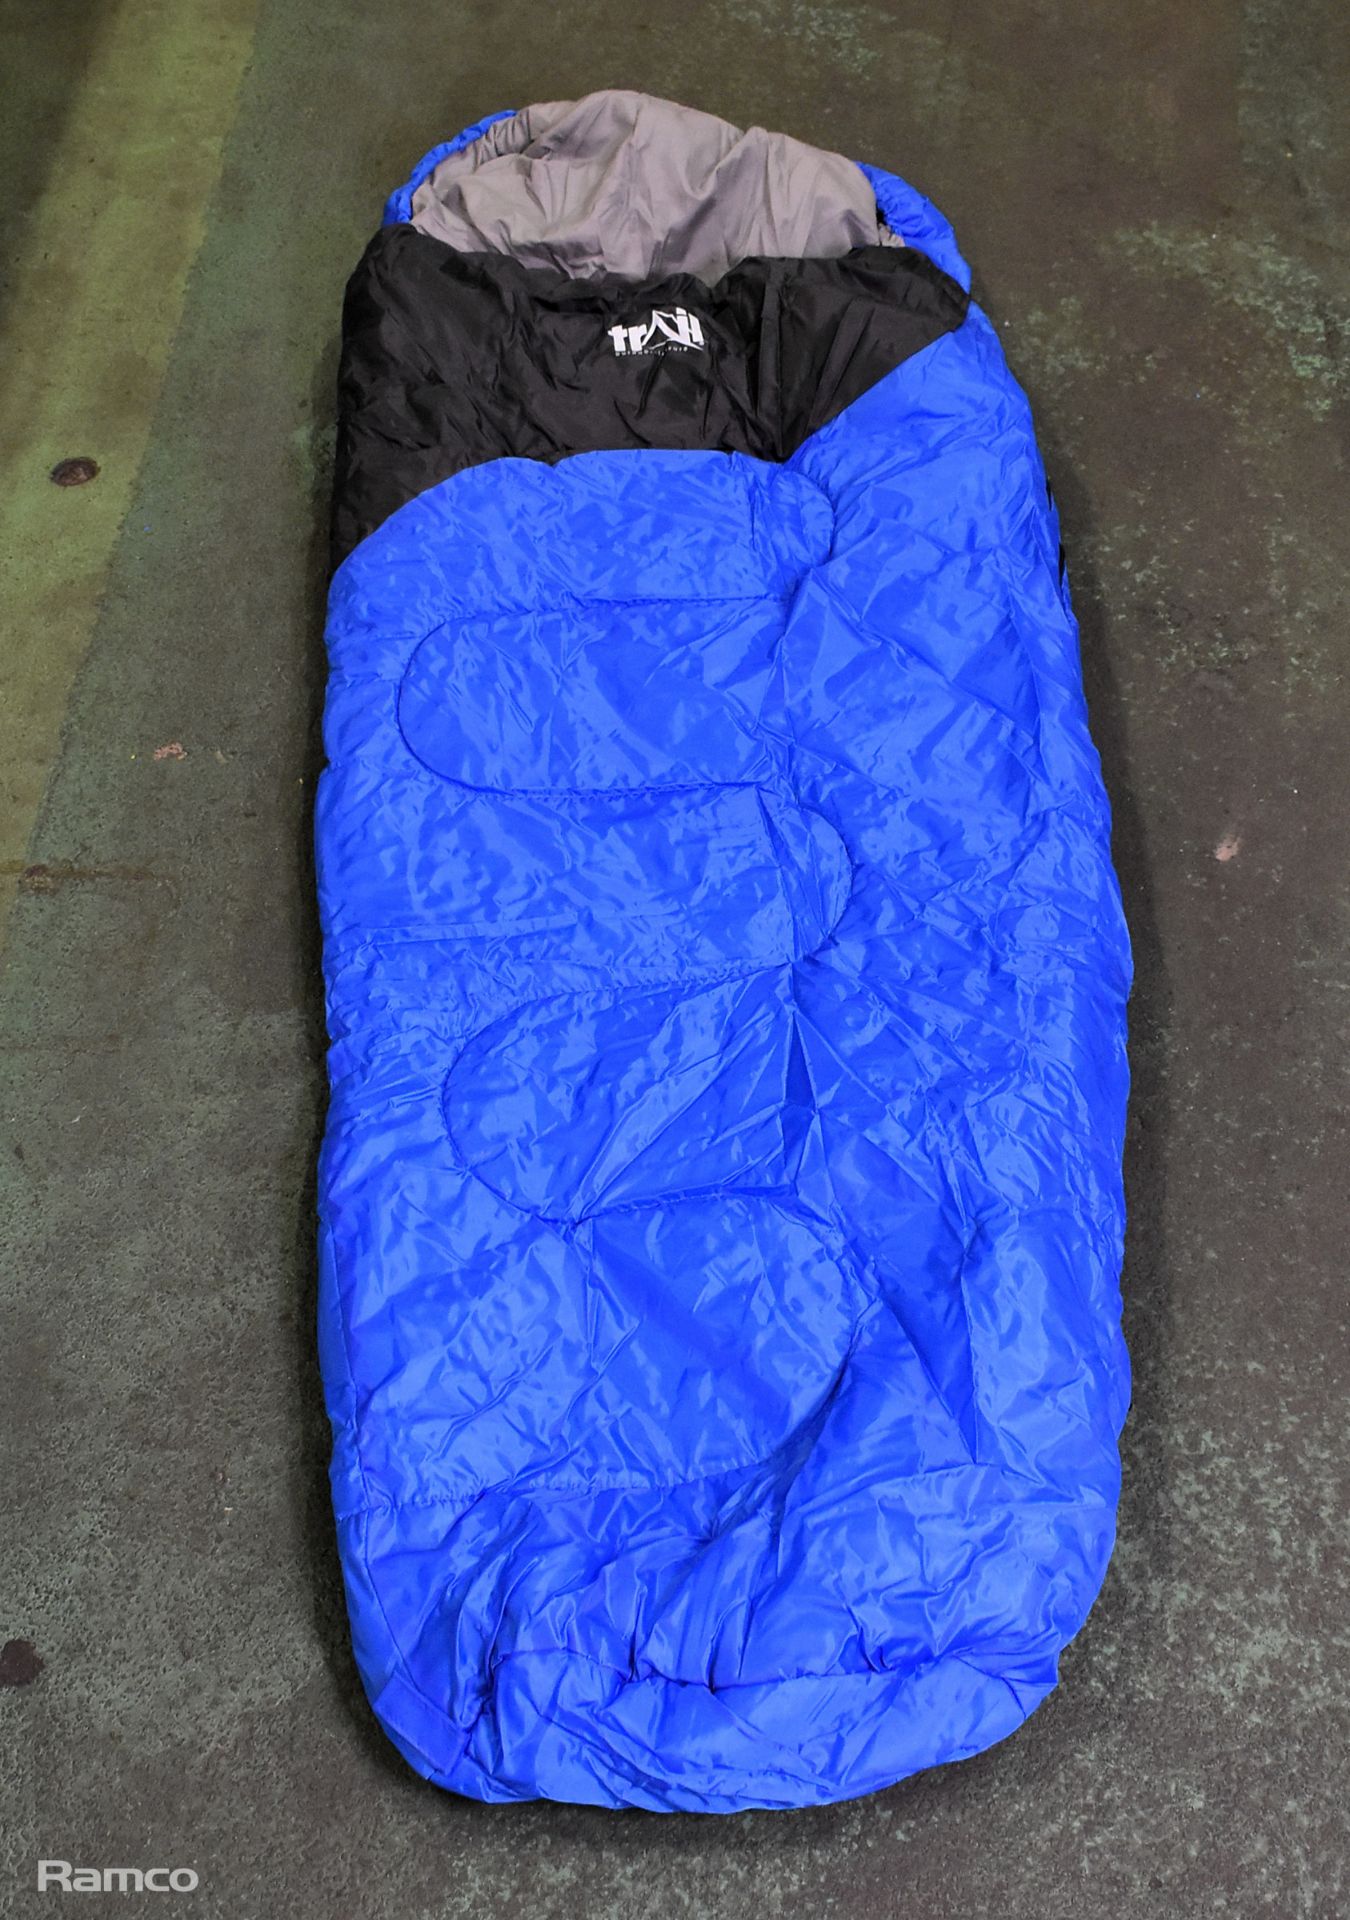 Overnight adventure outdoor sleeping bag in a rucksack - Bild 3 aus 6